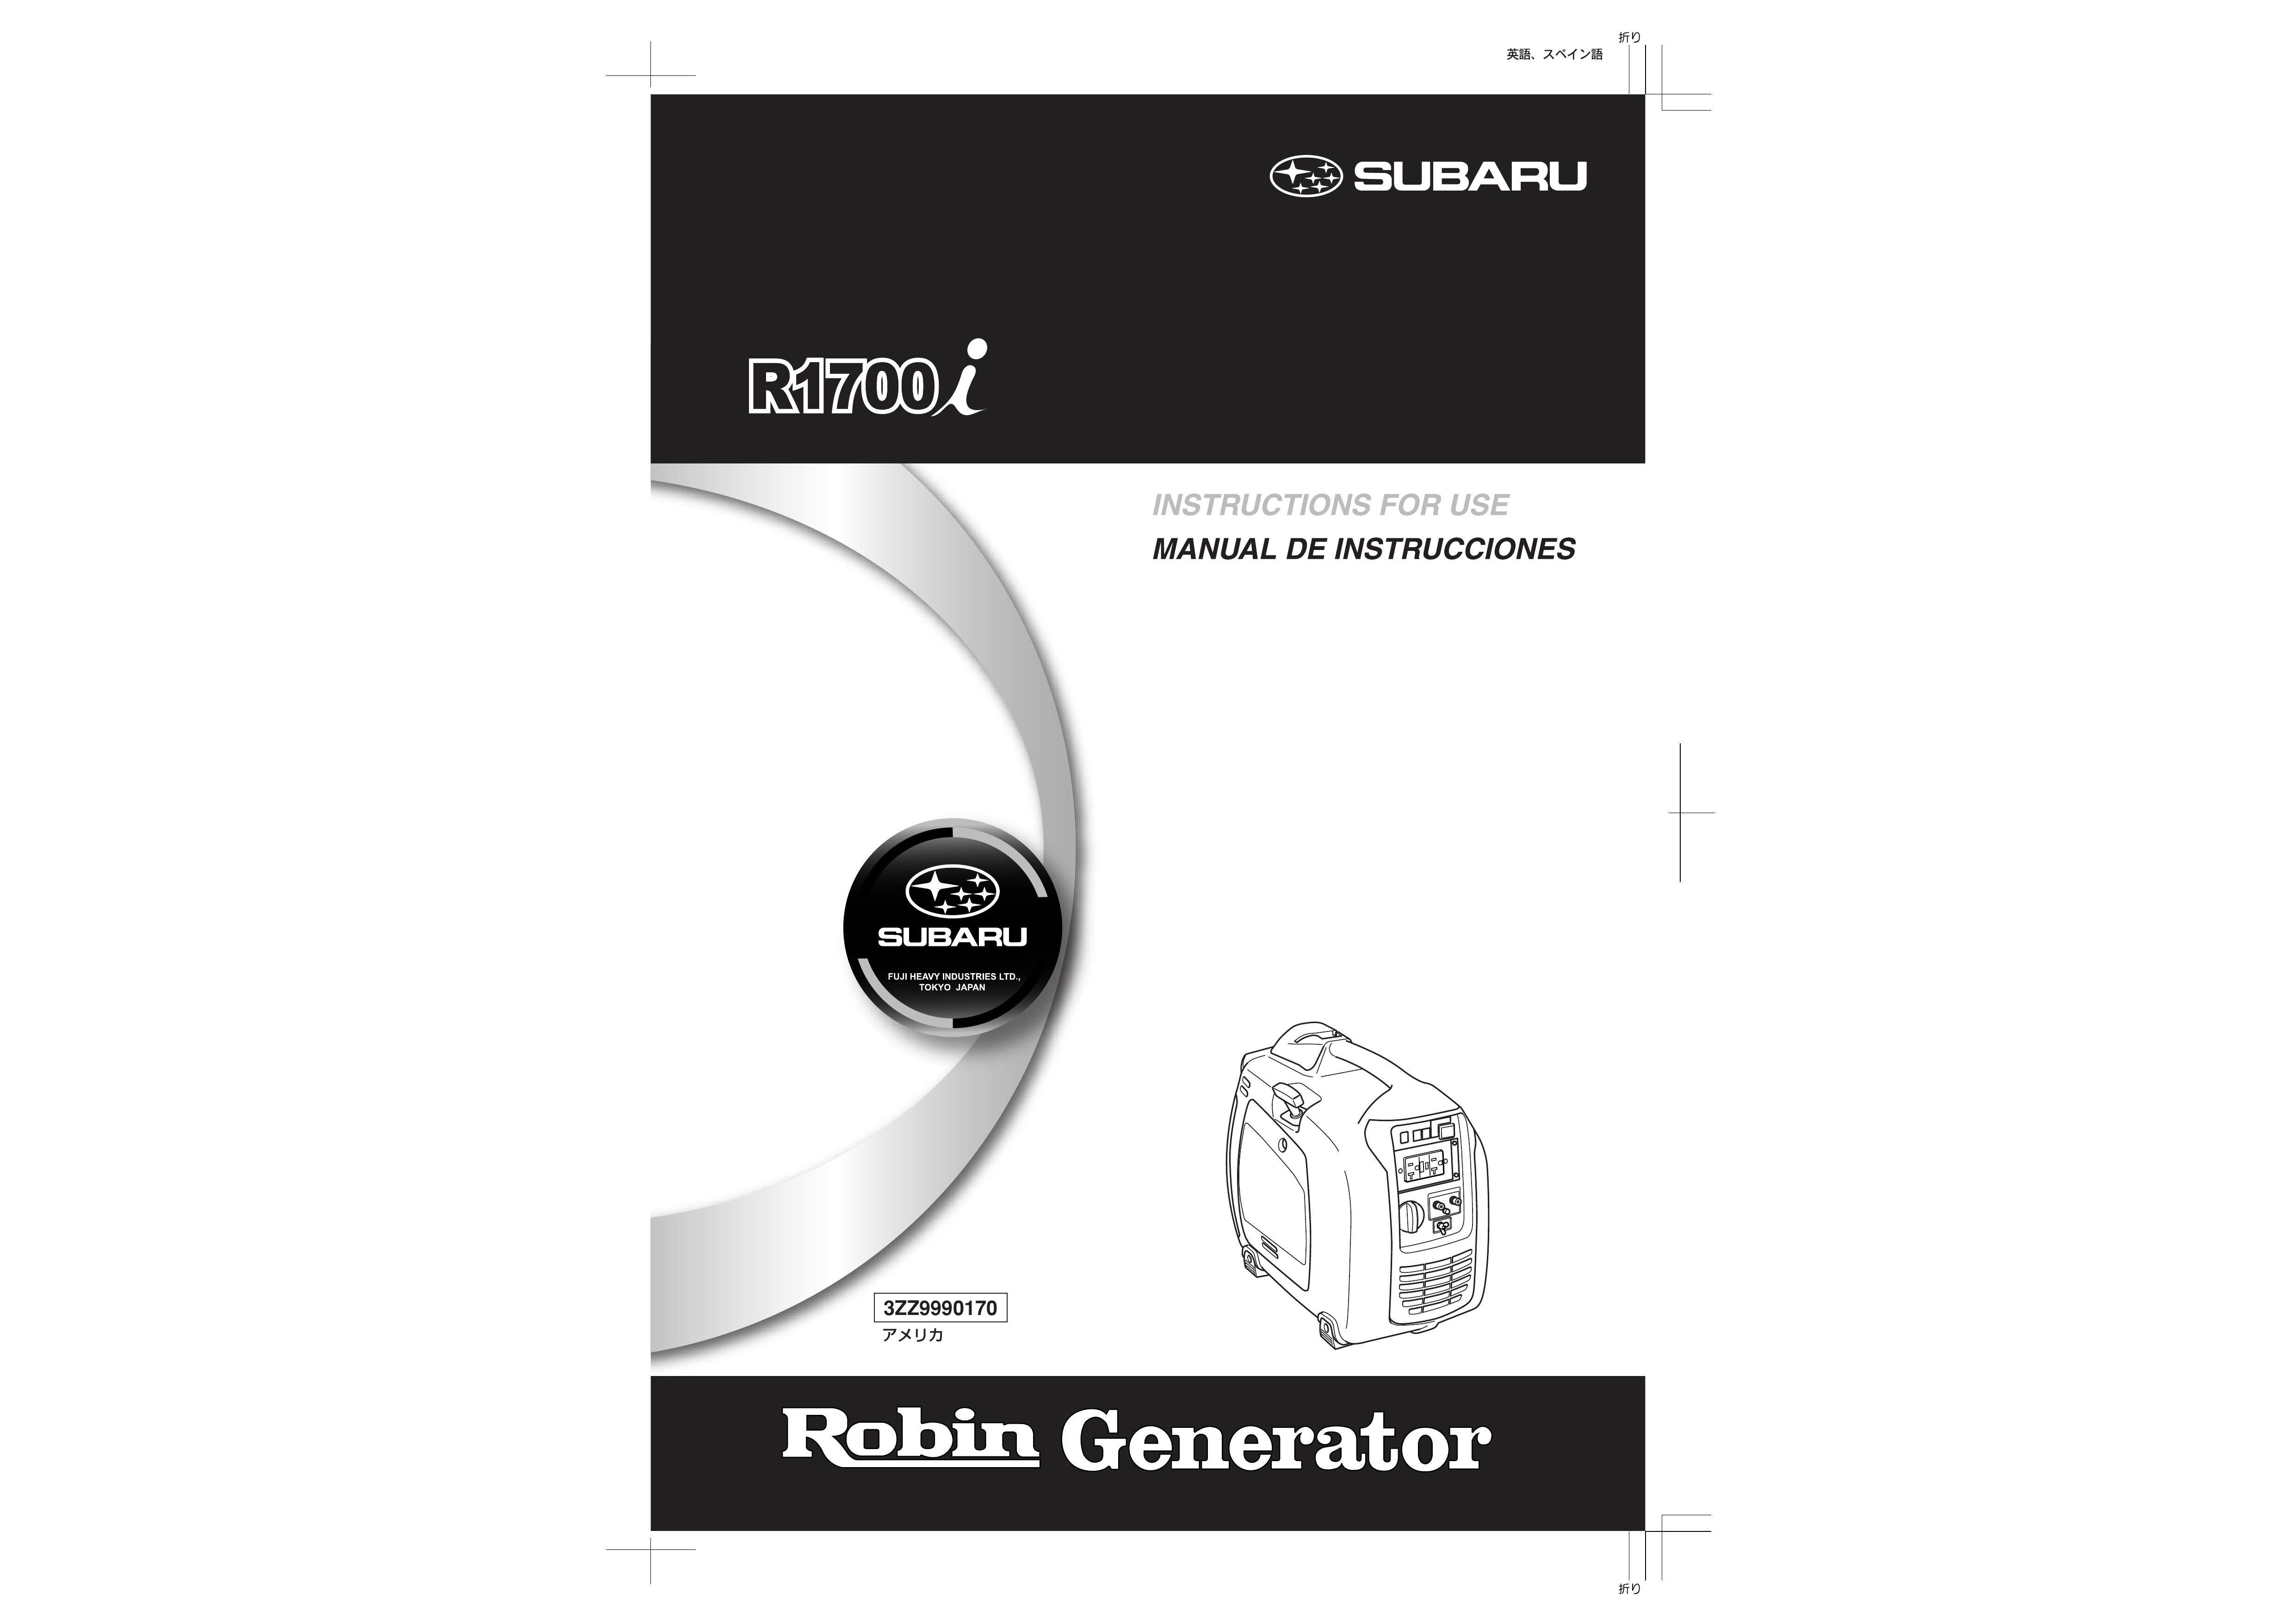 Subaru Robin Power Products R1700i Portable Generator User Manual